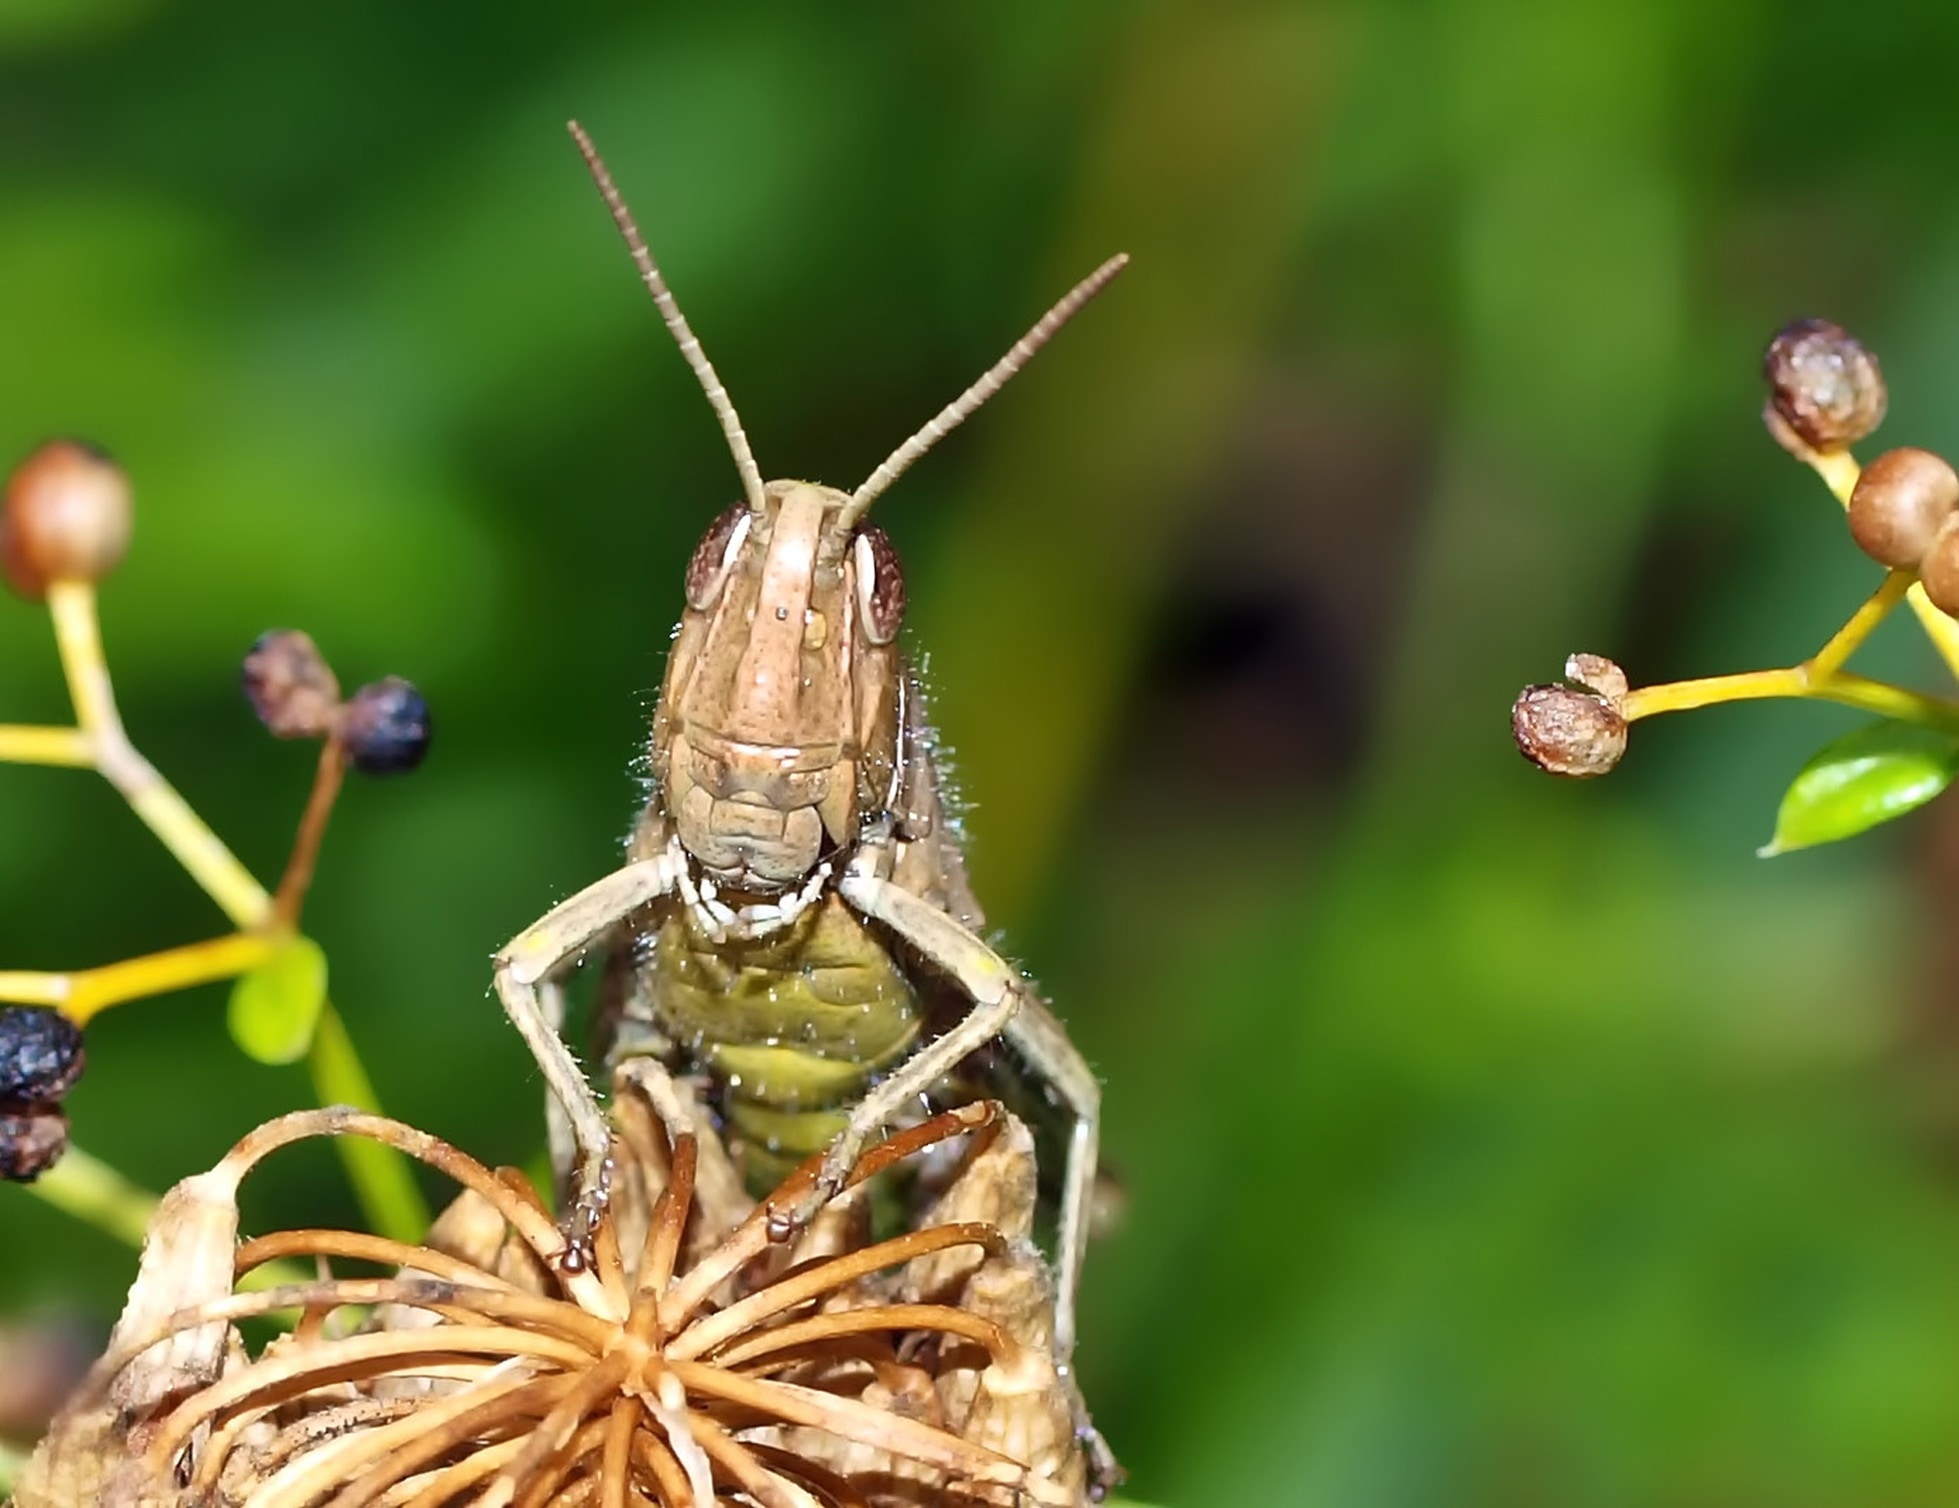 brown grasshopper